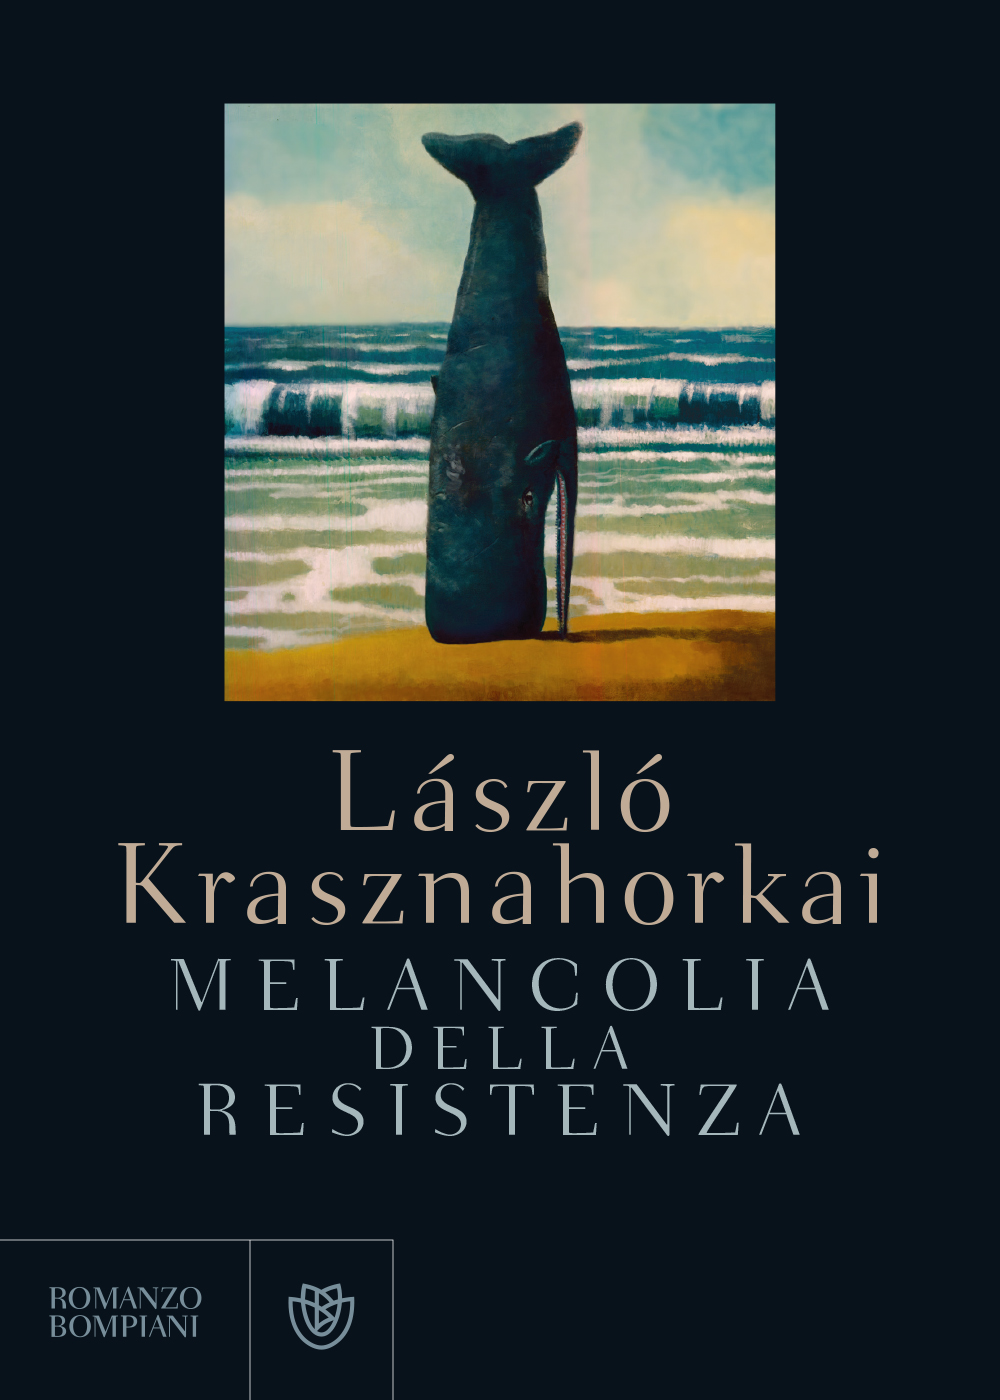 László Krasznahorkai: Melancolia della resistenza (Paperback, Italian language, Bompiani)